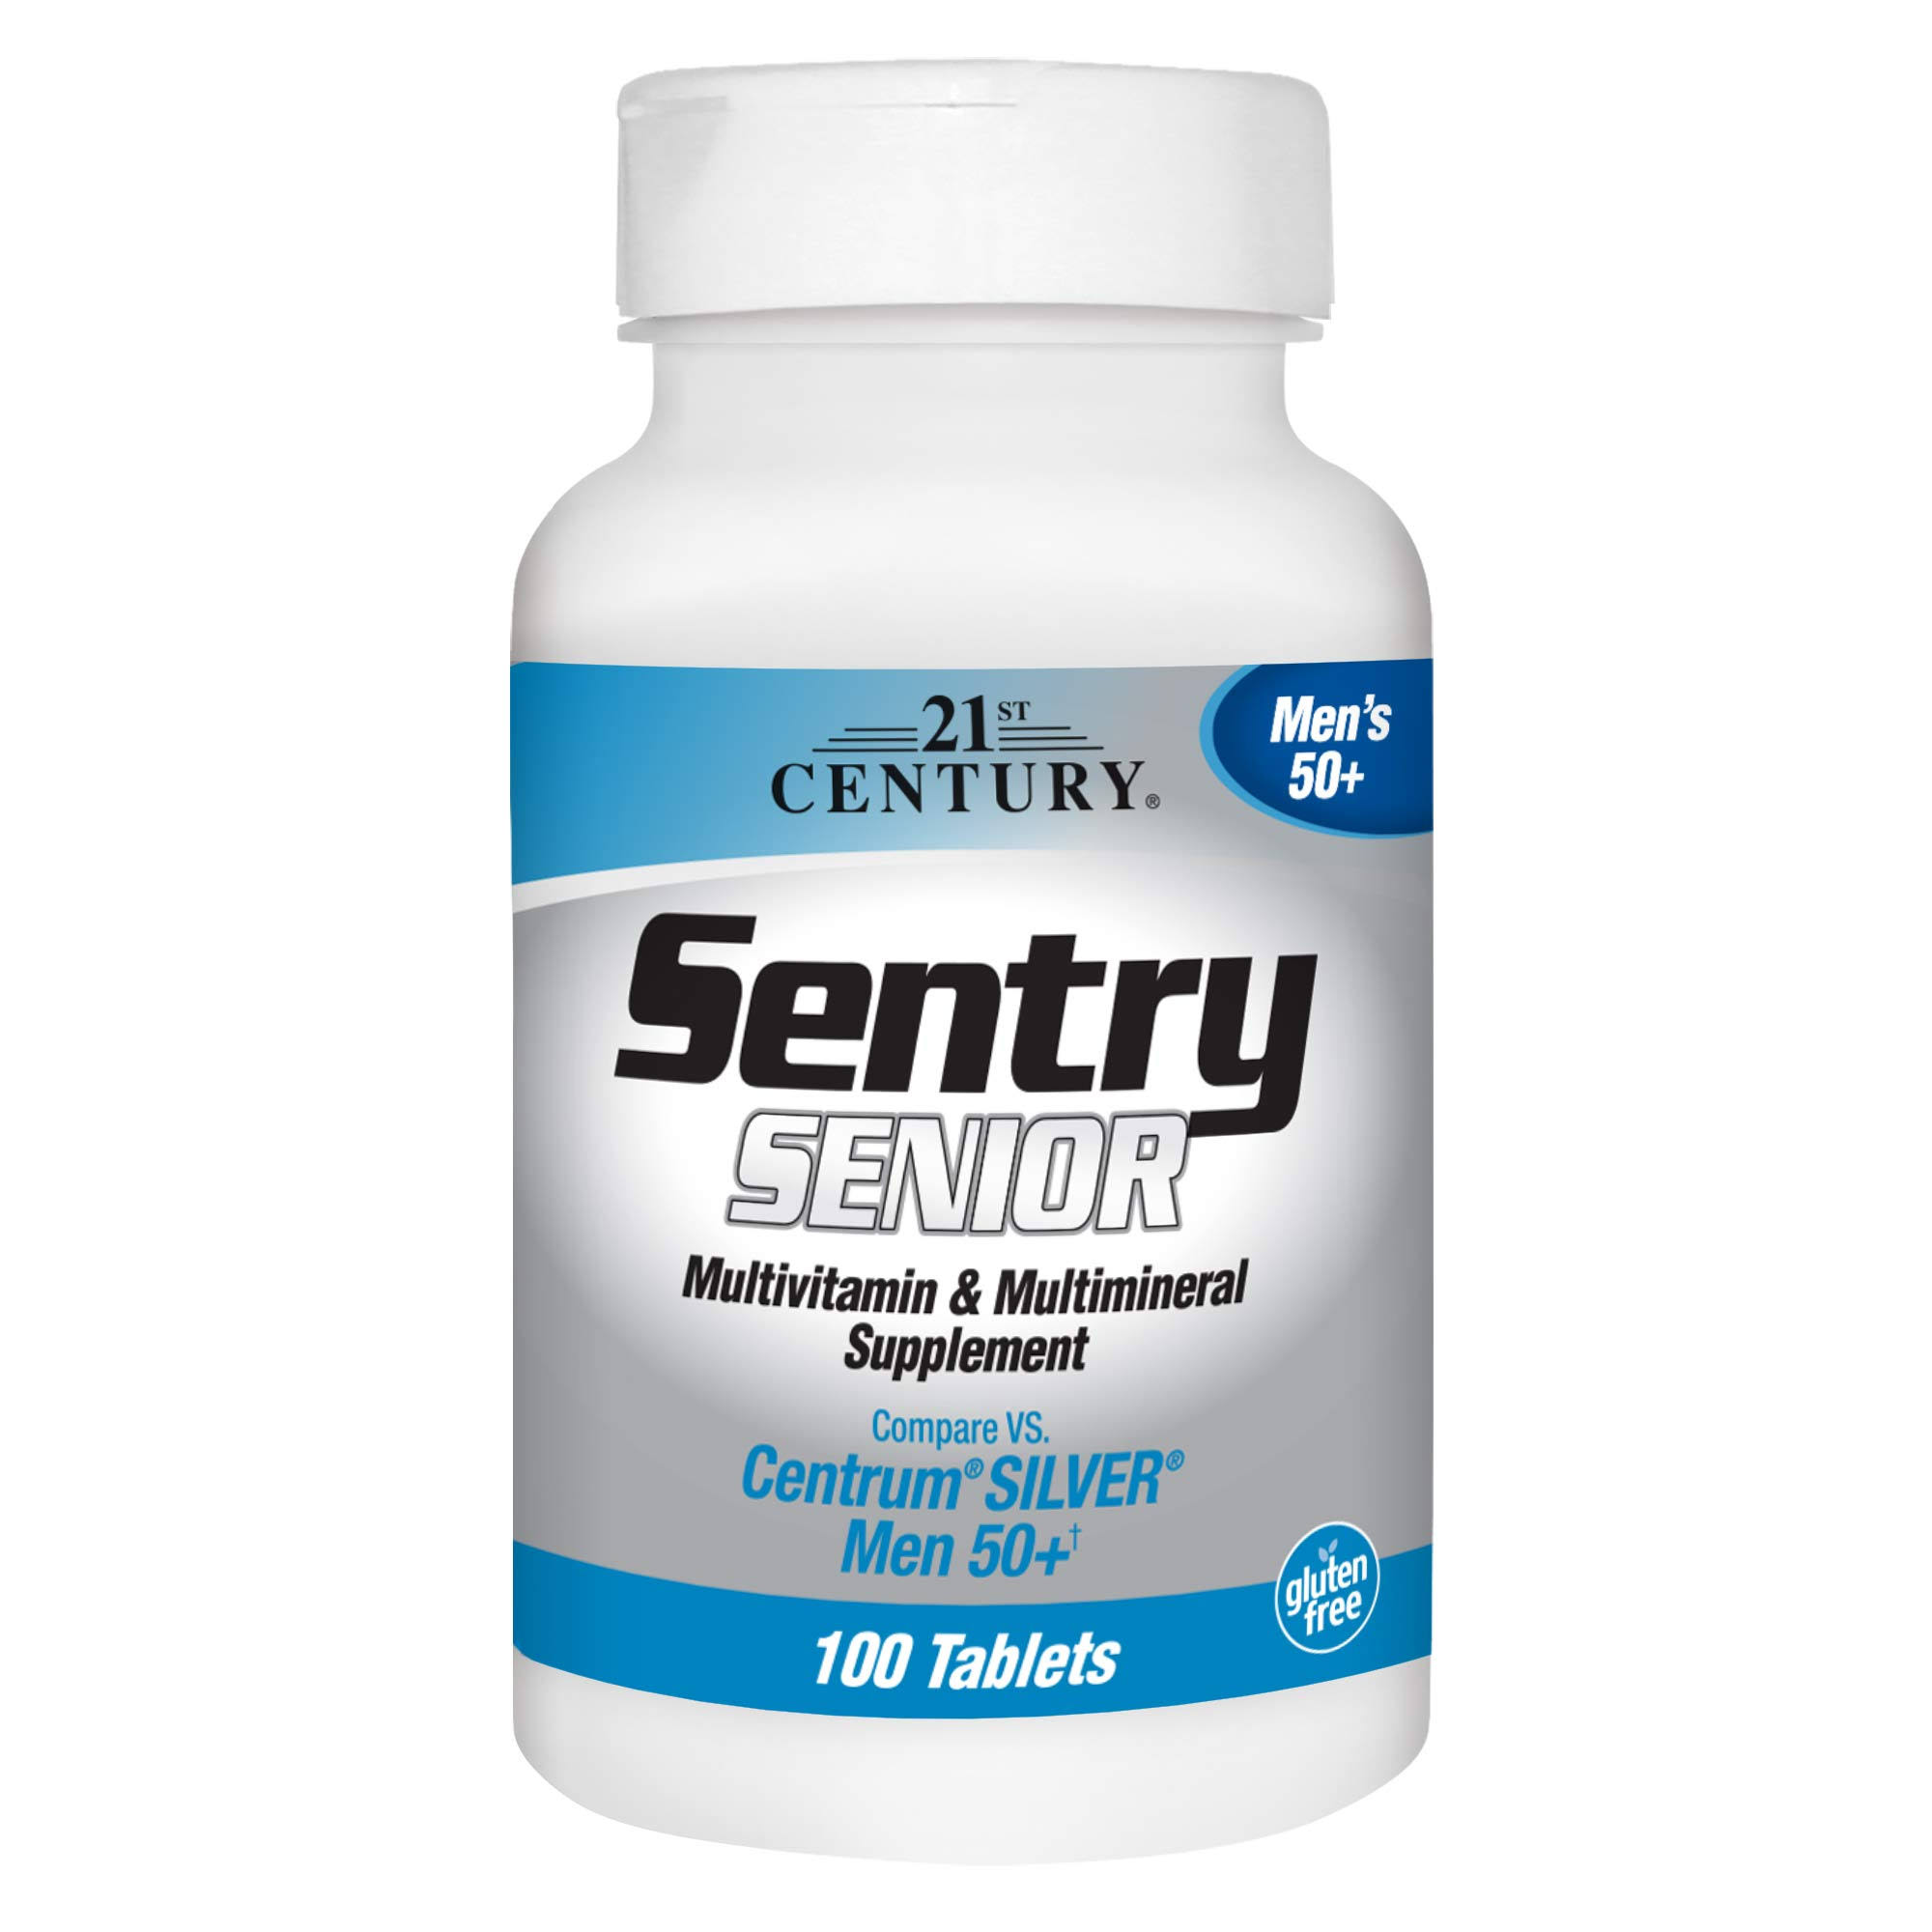 21ST Century Sentry Senior Multivitamin and Multimineral Supplement - 100ct